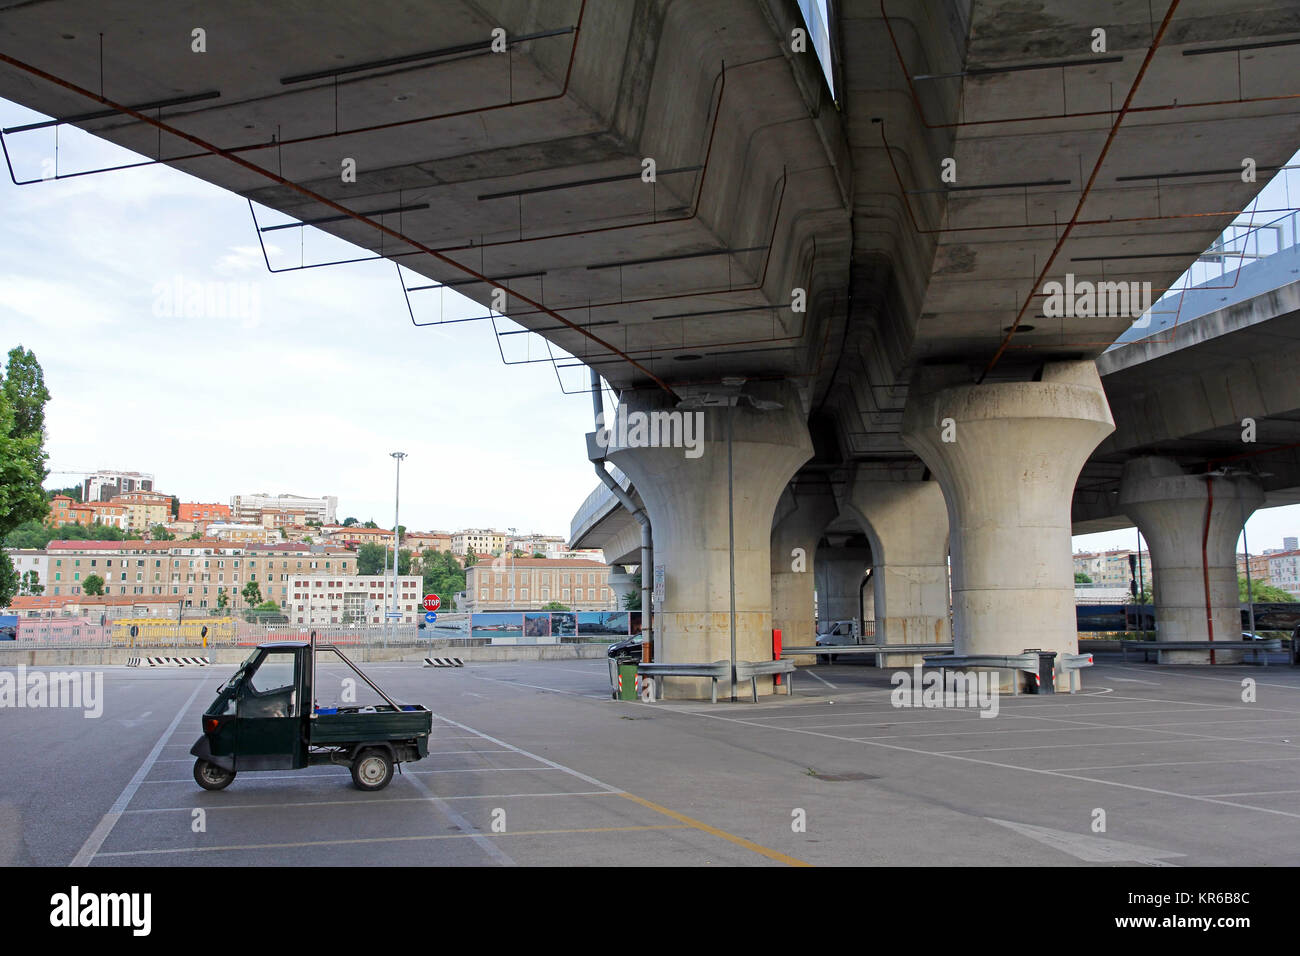 an ape vans under a bridge in italy Stock Photo